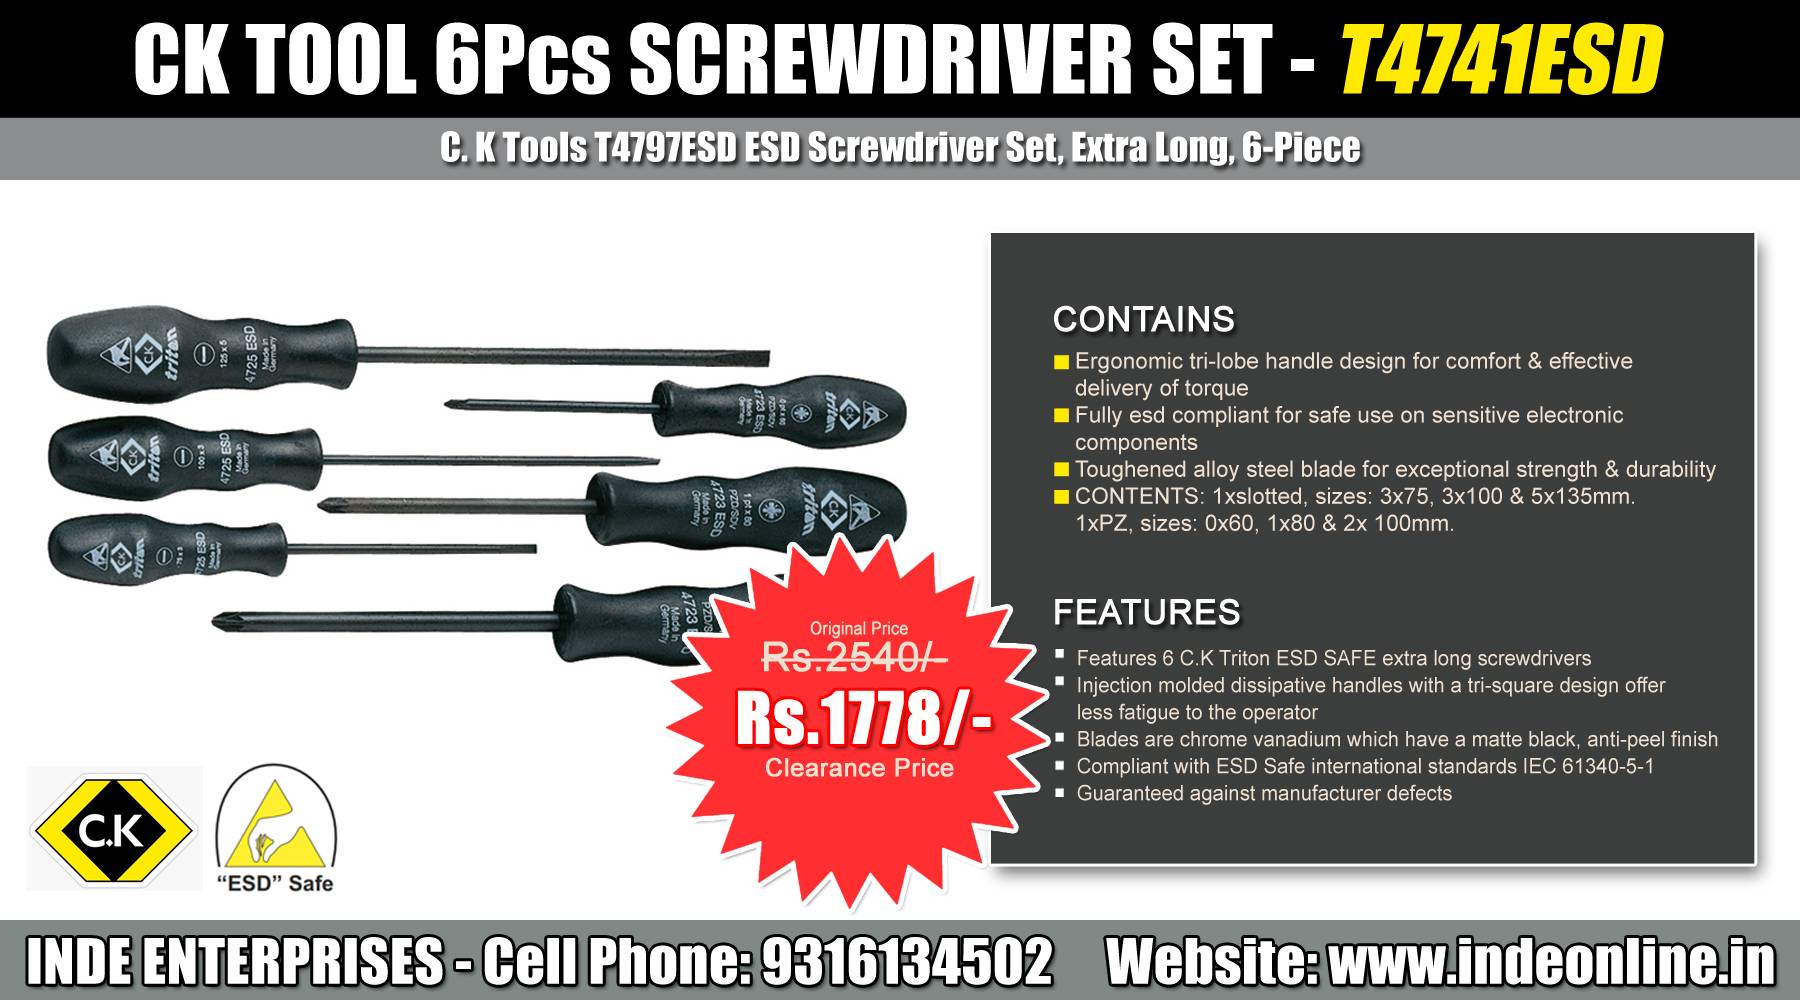 Ck Tool 6 Pcs Screwdriver Set T4741ESD Price Rs.1778/-